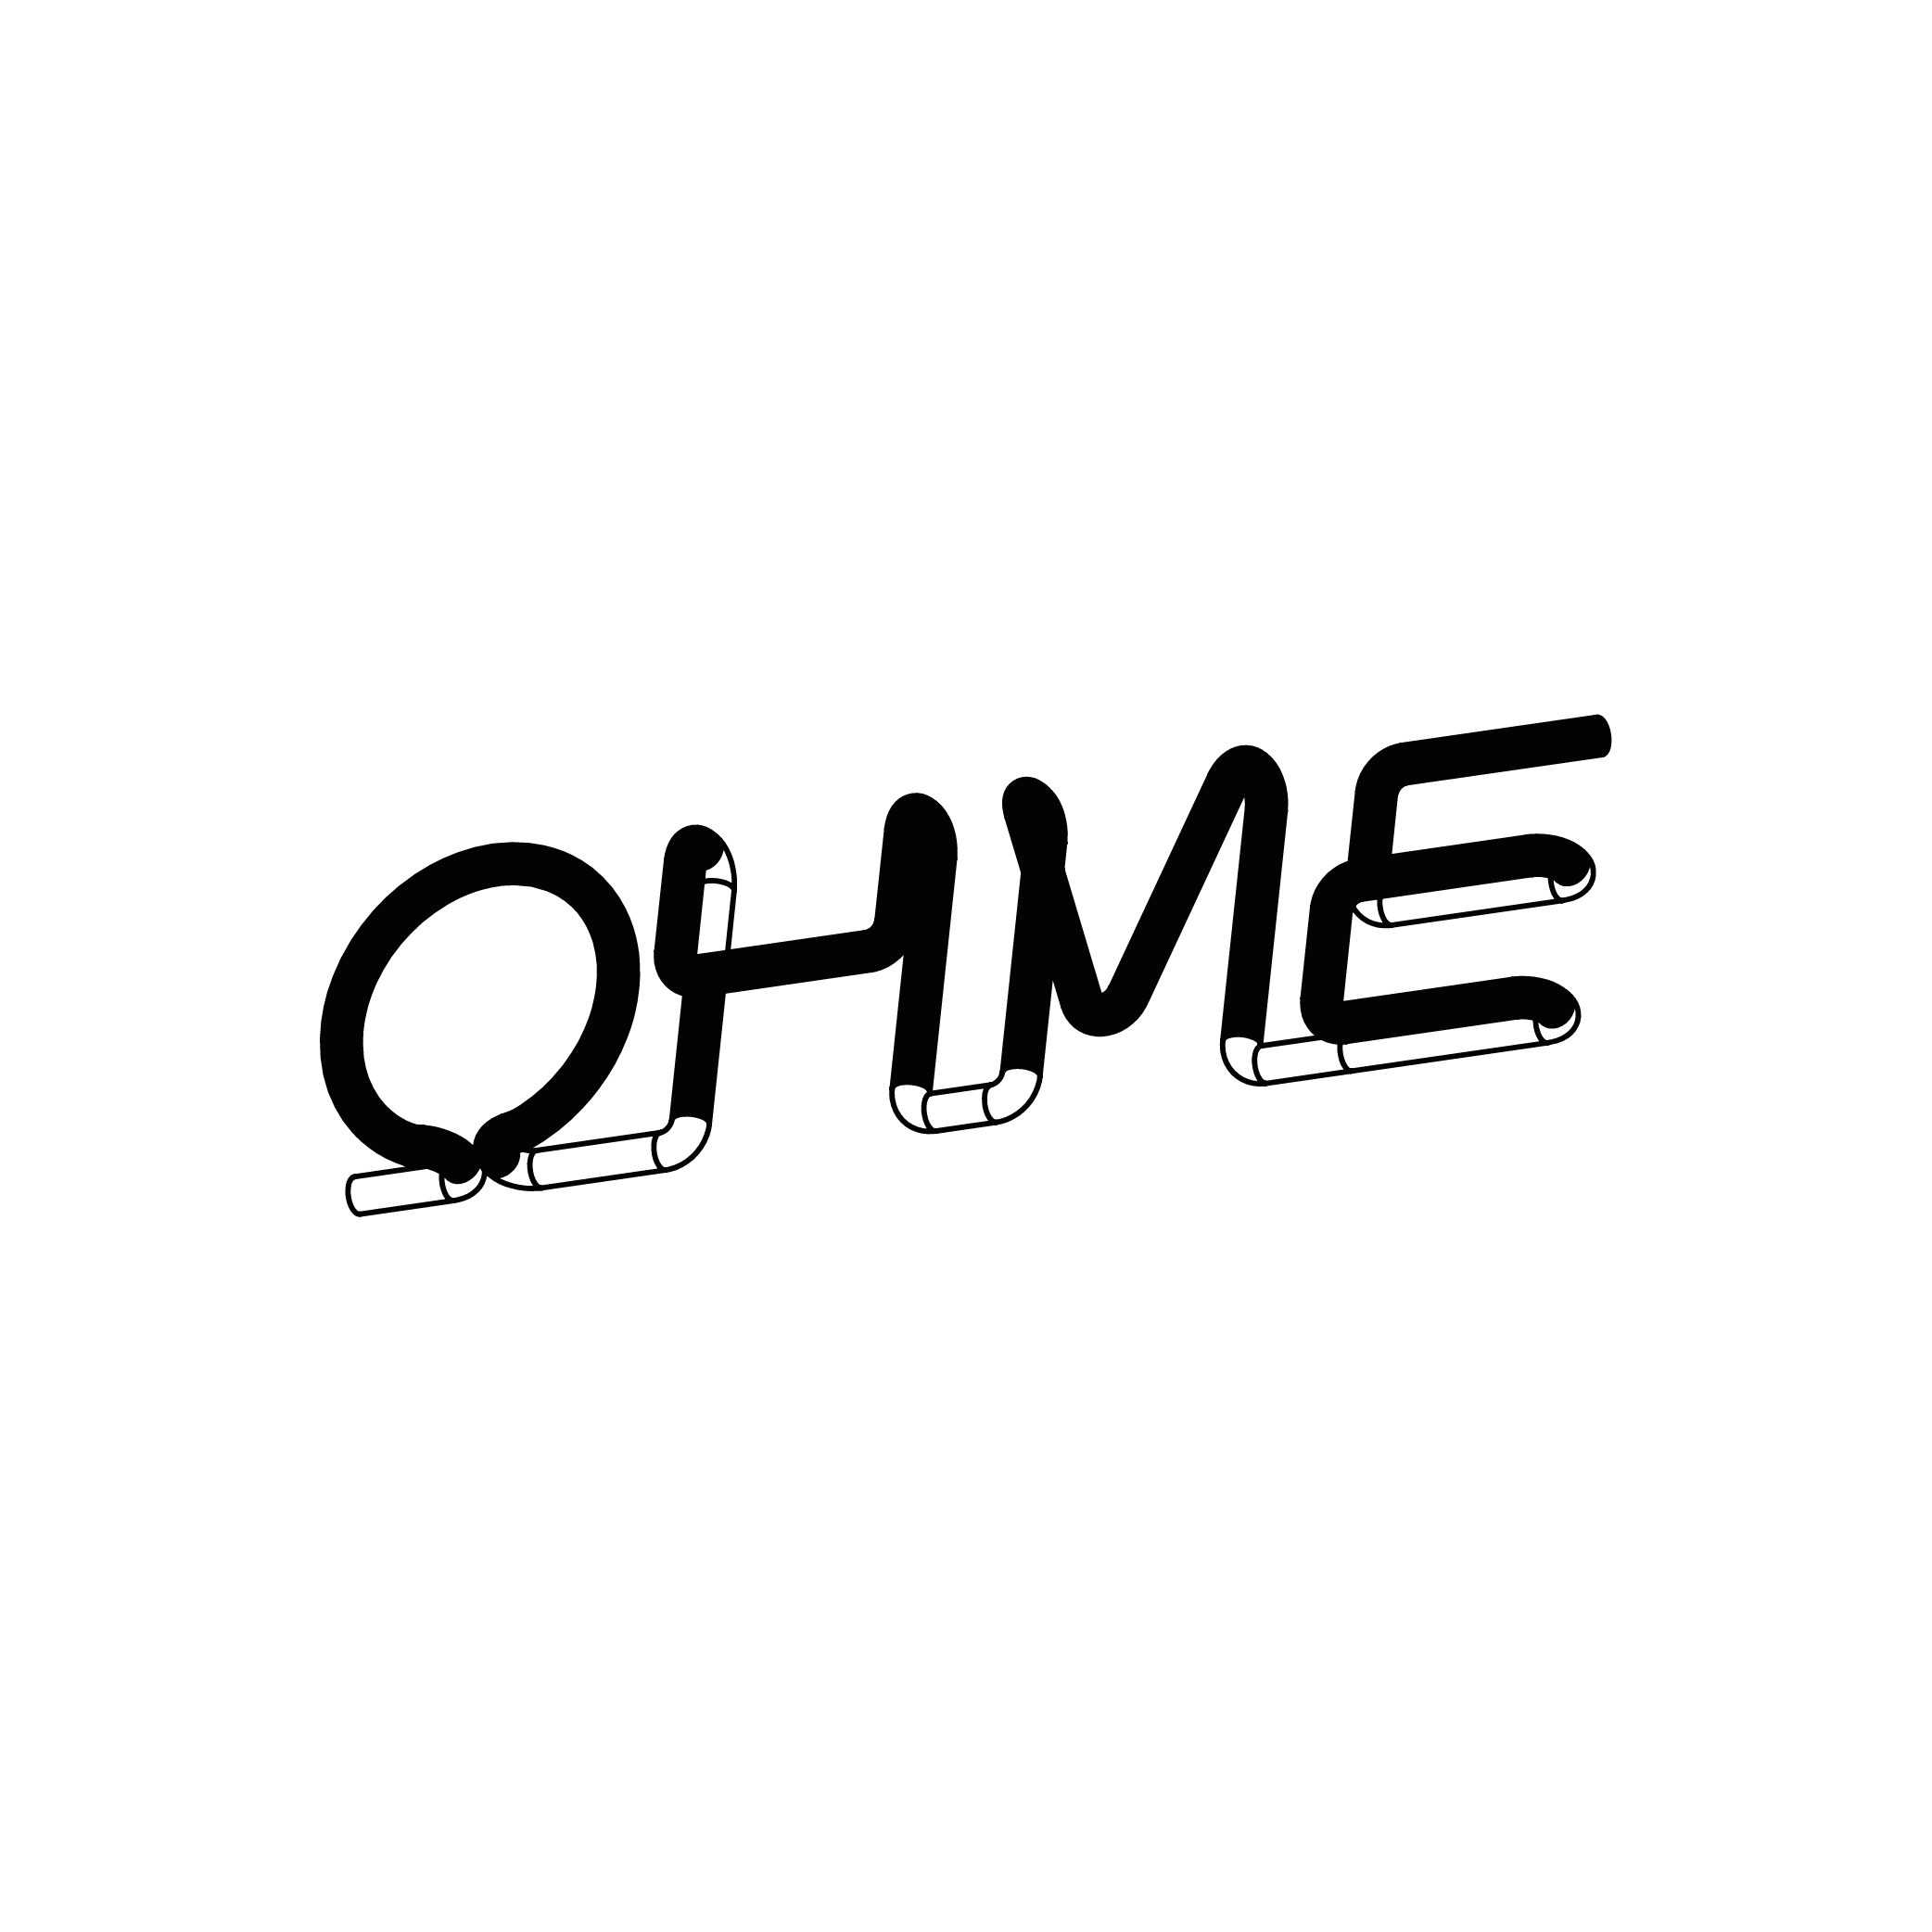 Ohme team